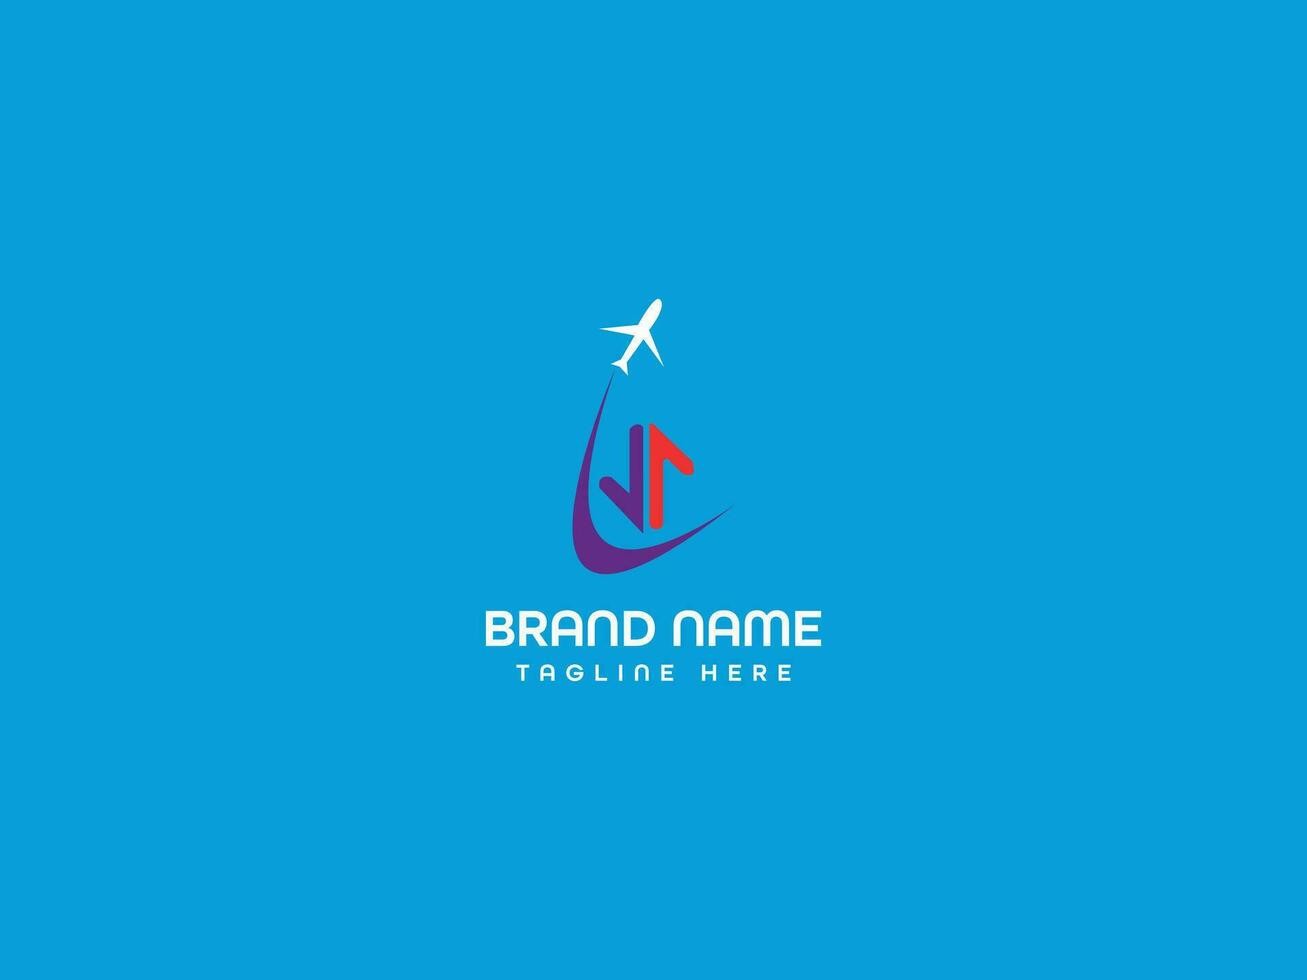 carta companhias aéreas logotipo vetor